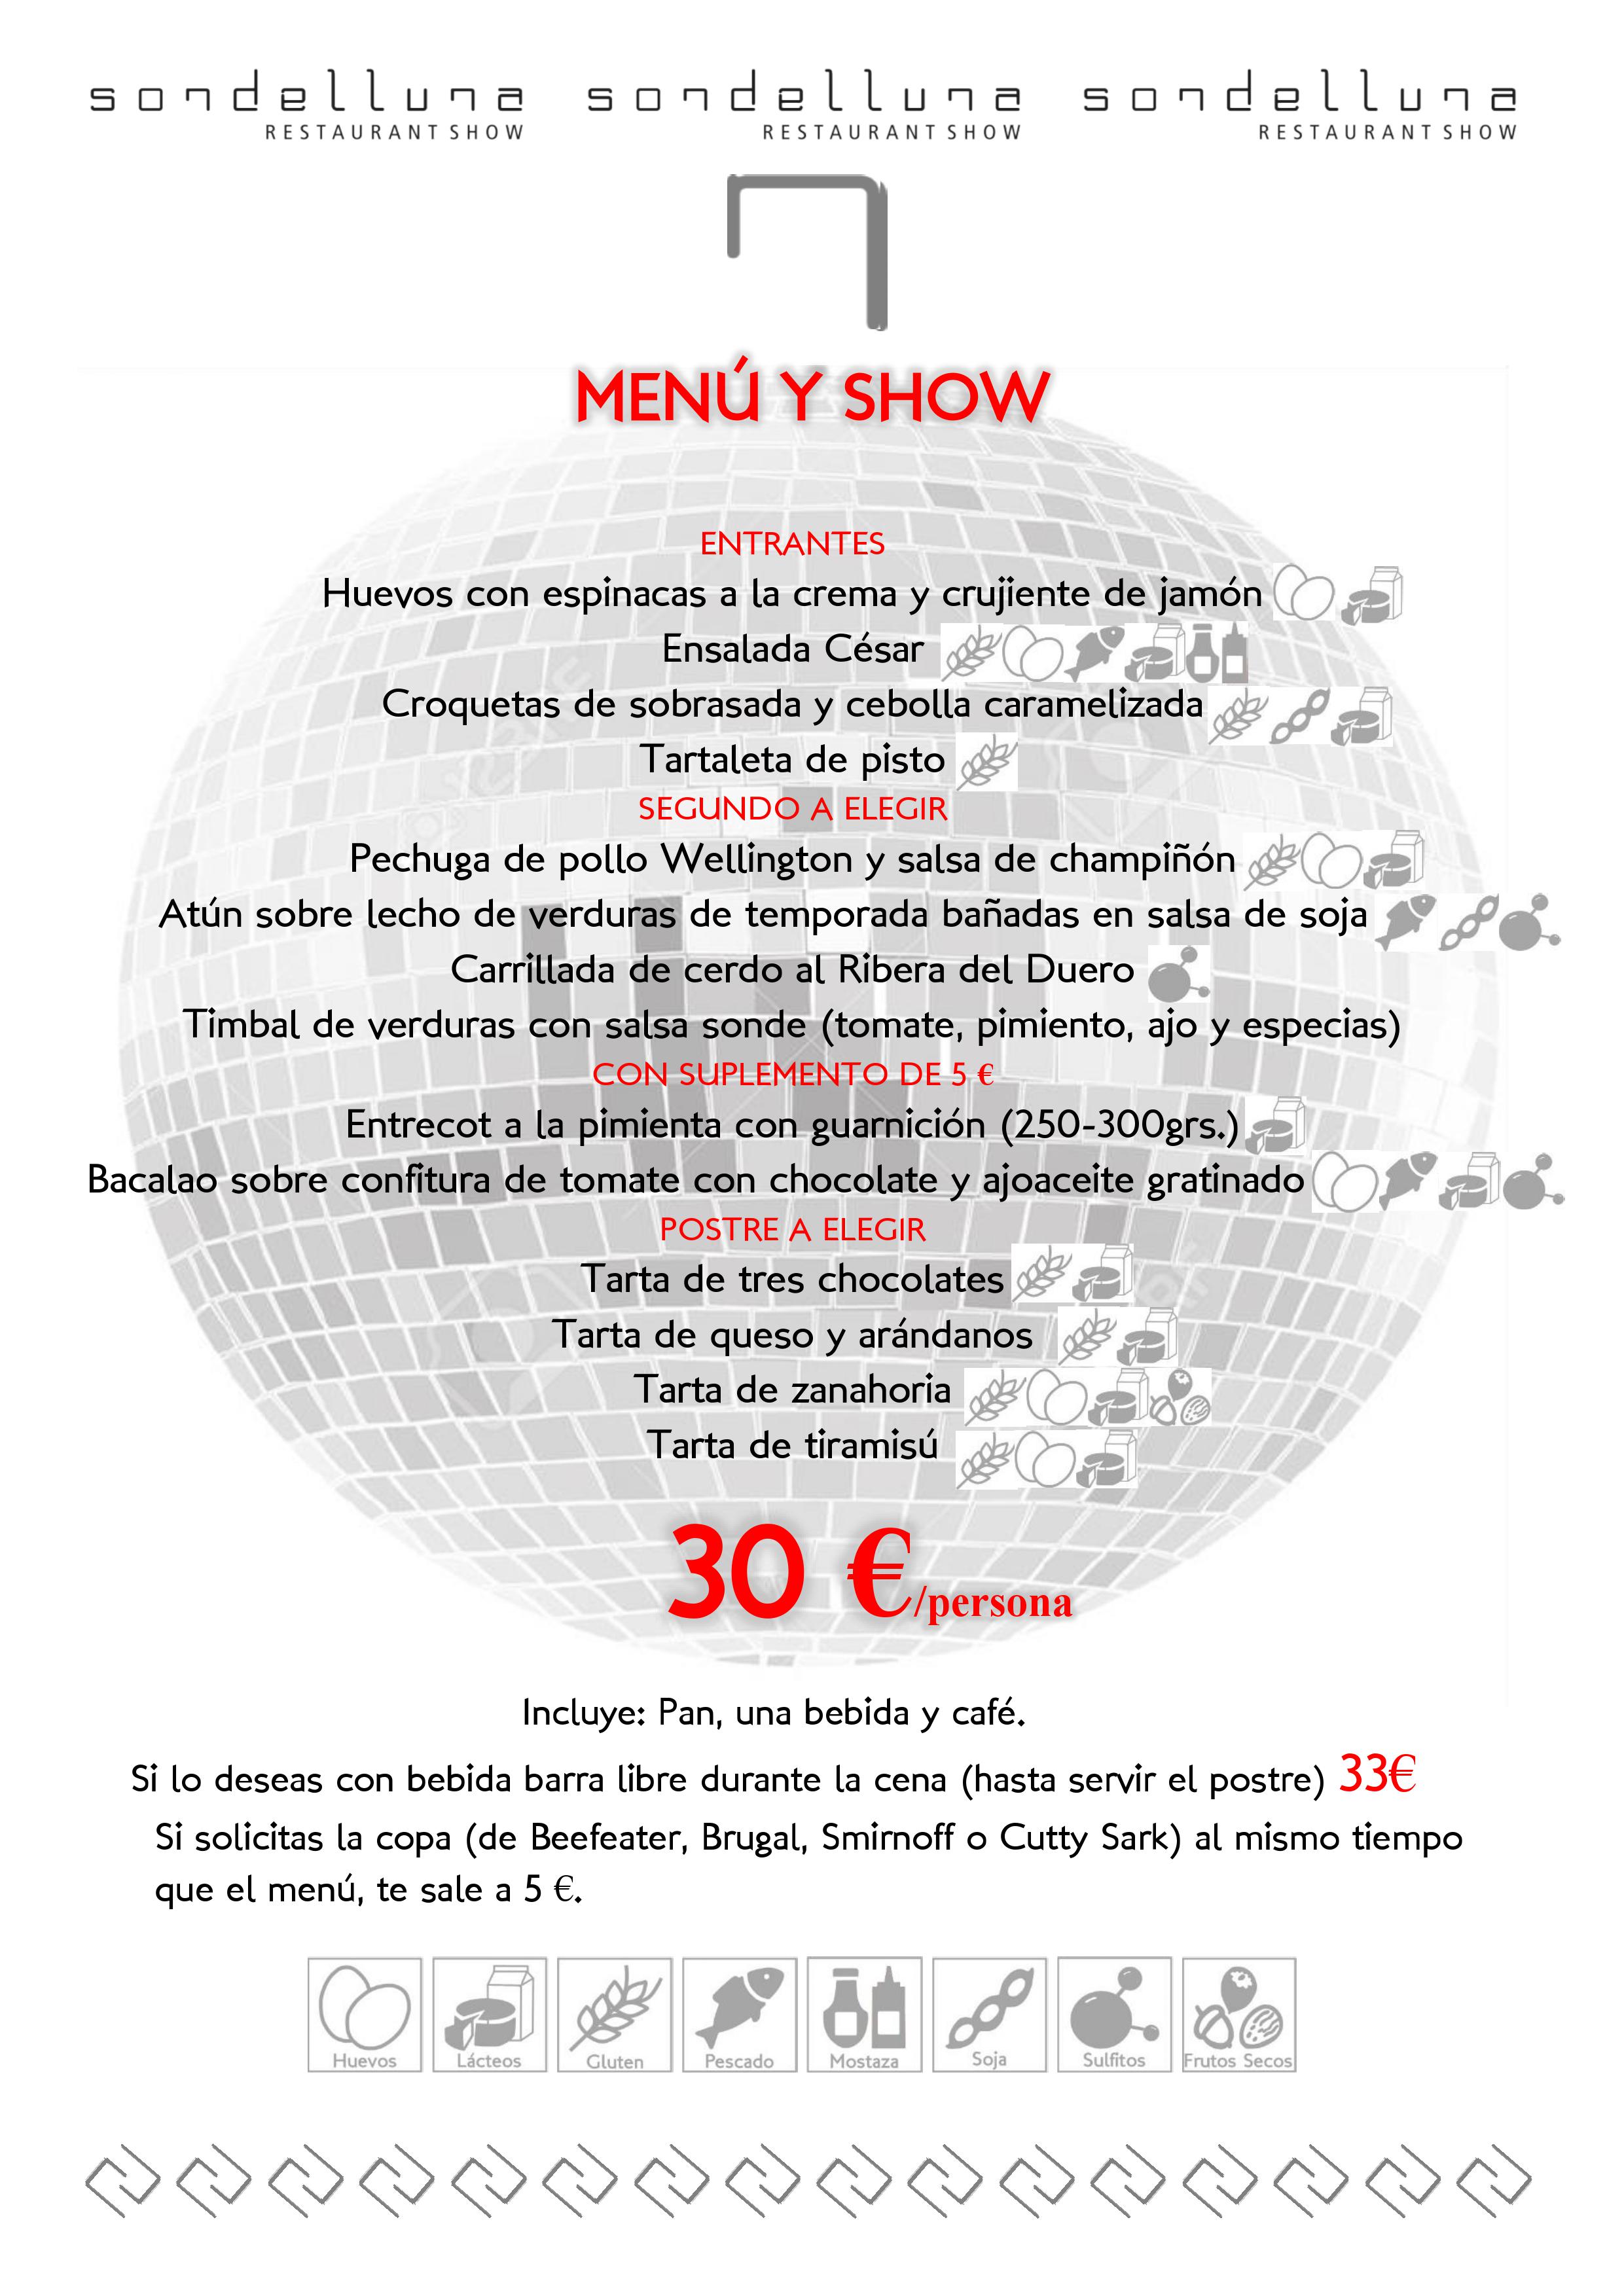 menu show sondelluna